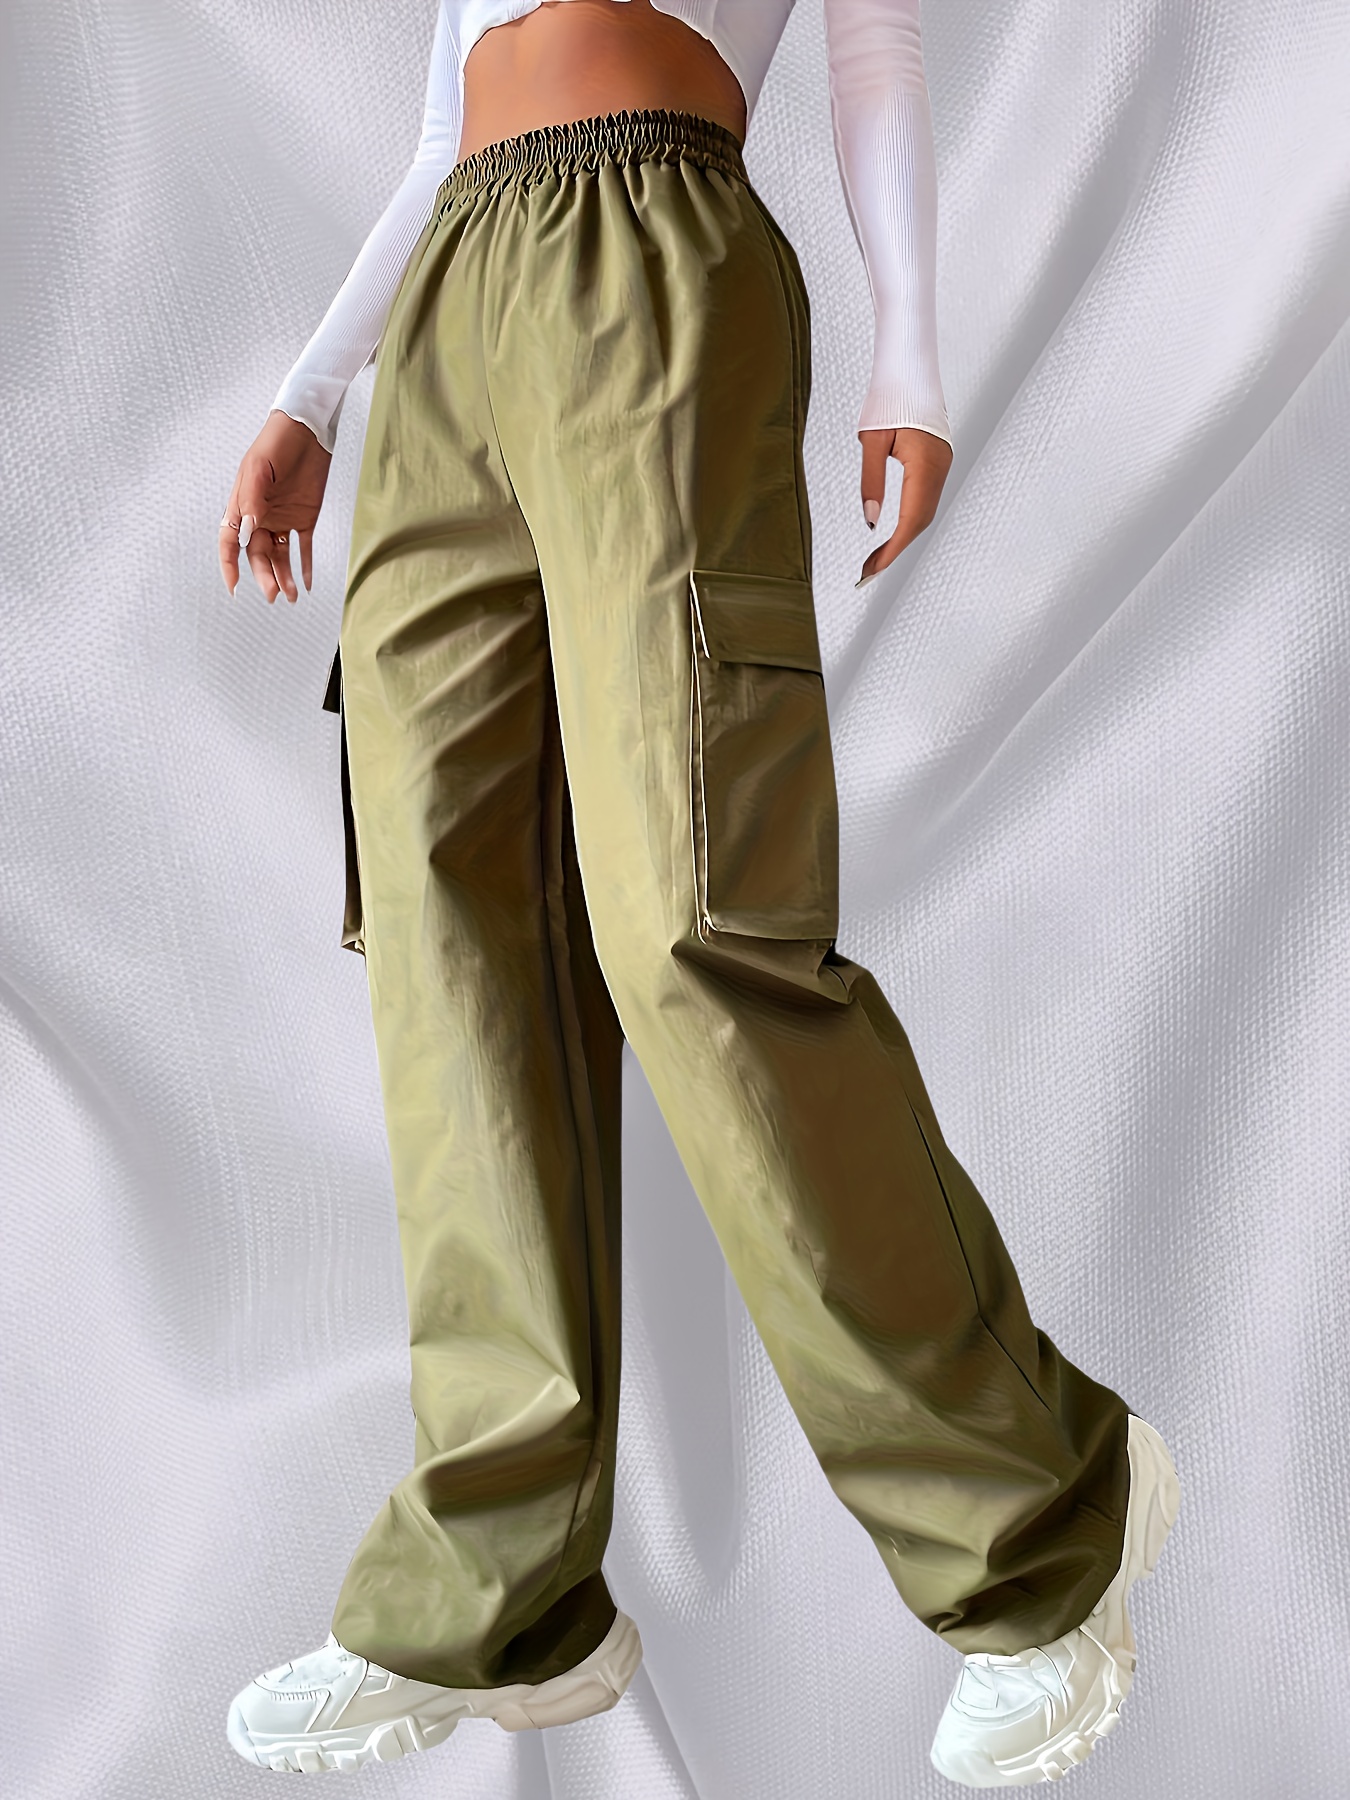 Lw Plain Pocket Sweatpants Side Pockets Drawstring Cargo Pants